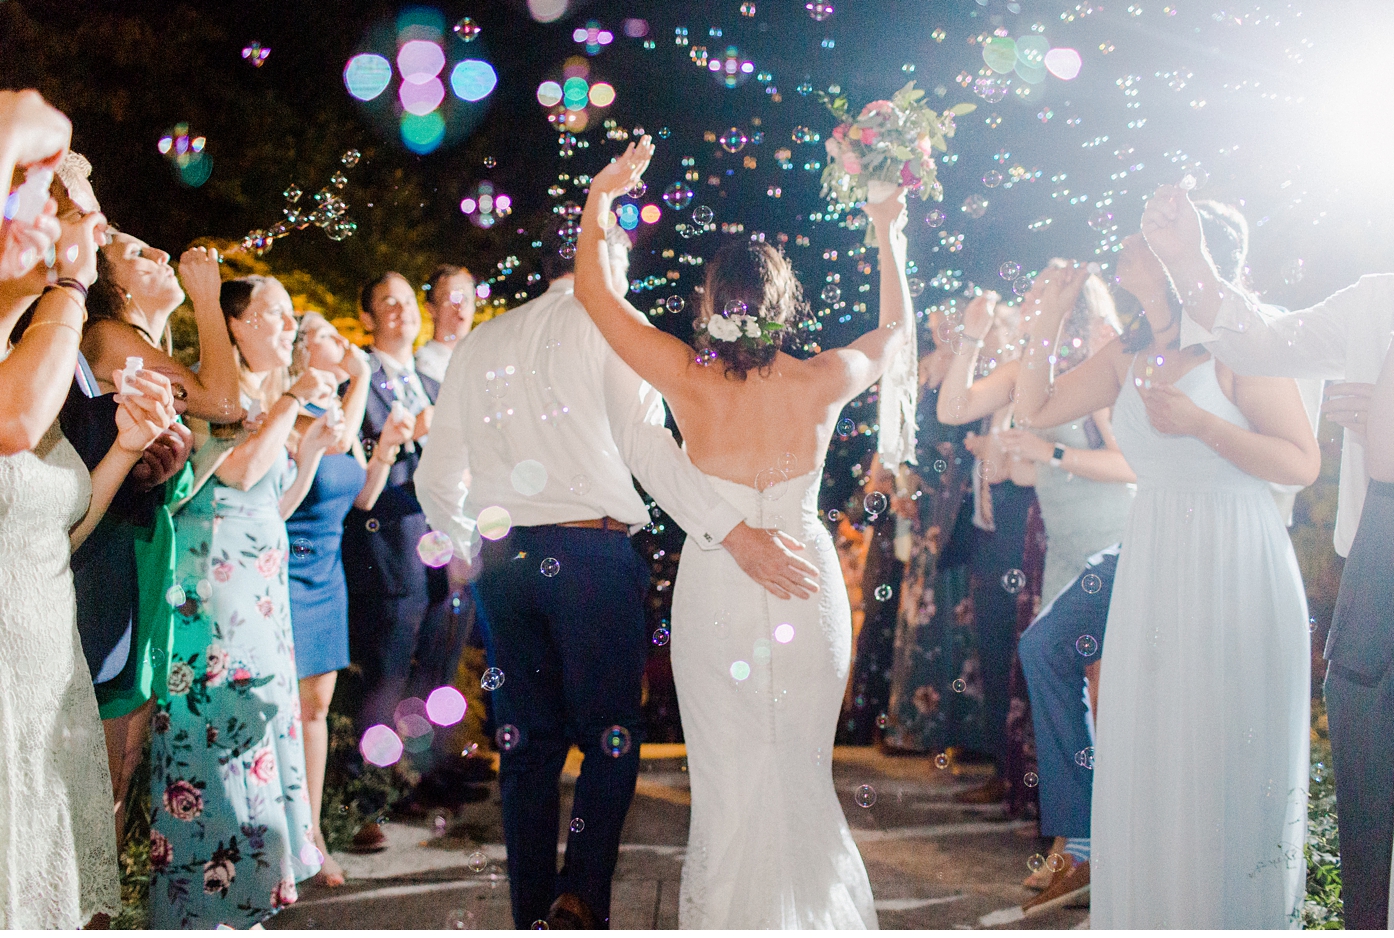 Lewis Ginter Wedding in Richmond VA by Alisandra Photography